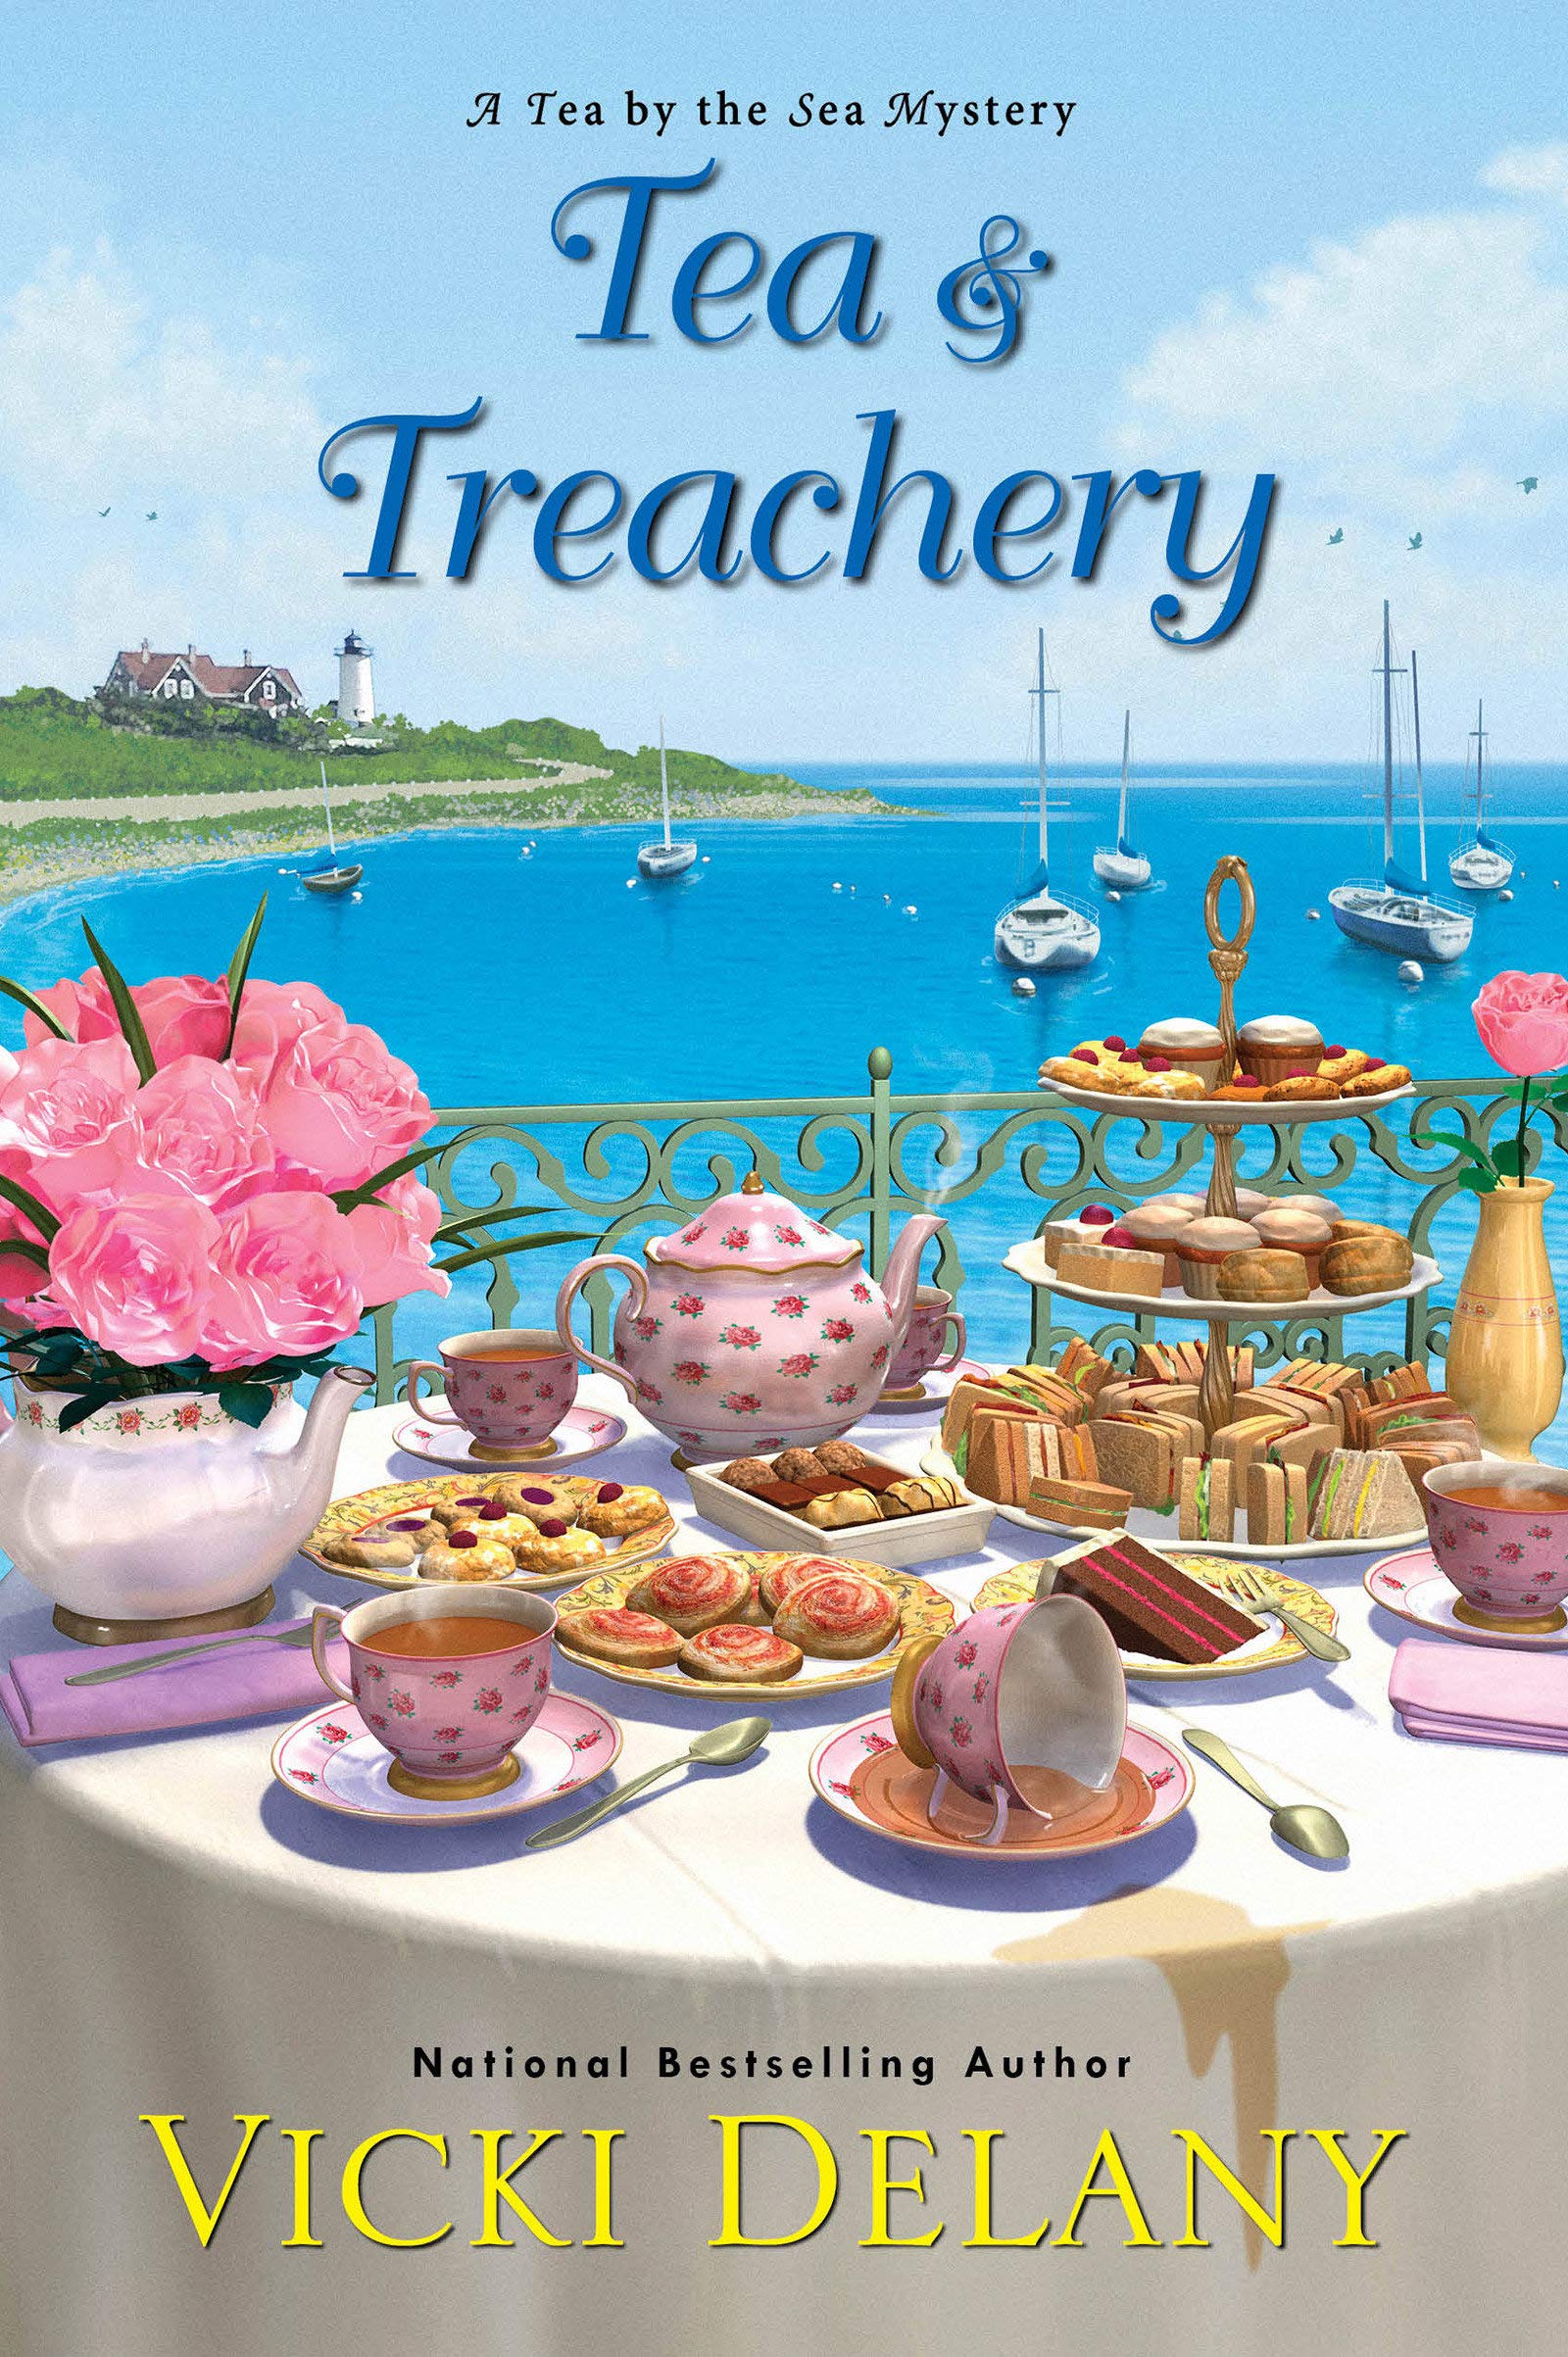 Image for "Tea & Treachery"